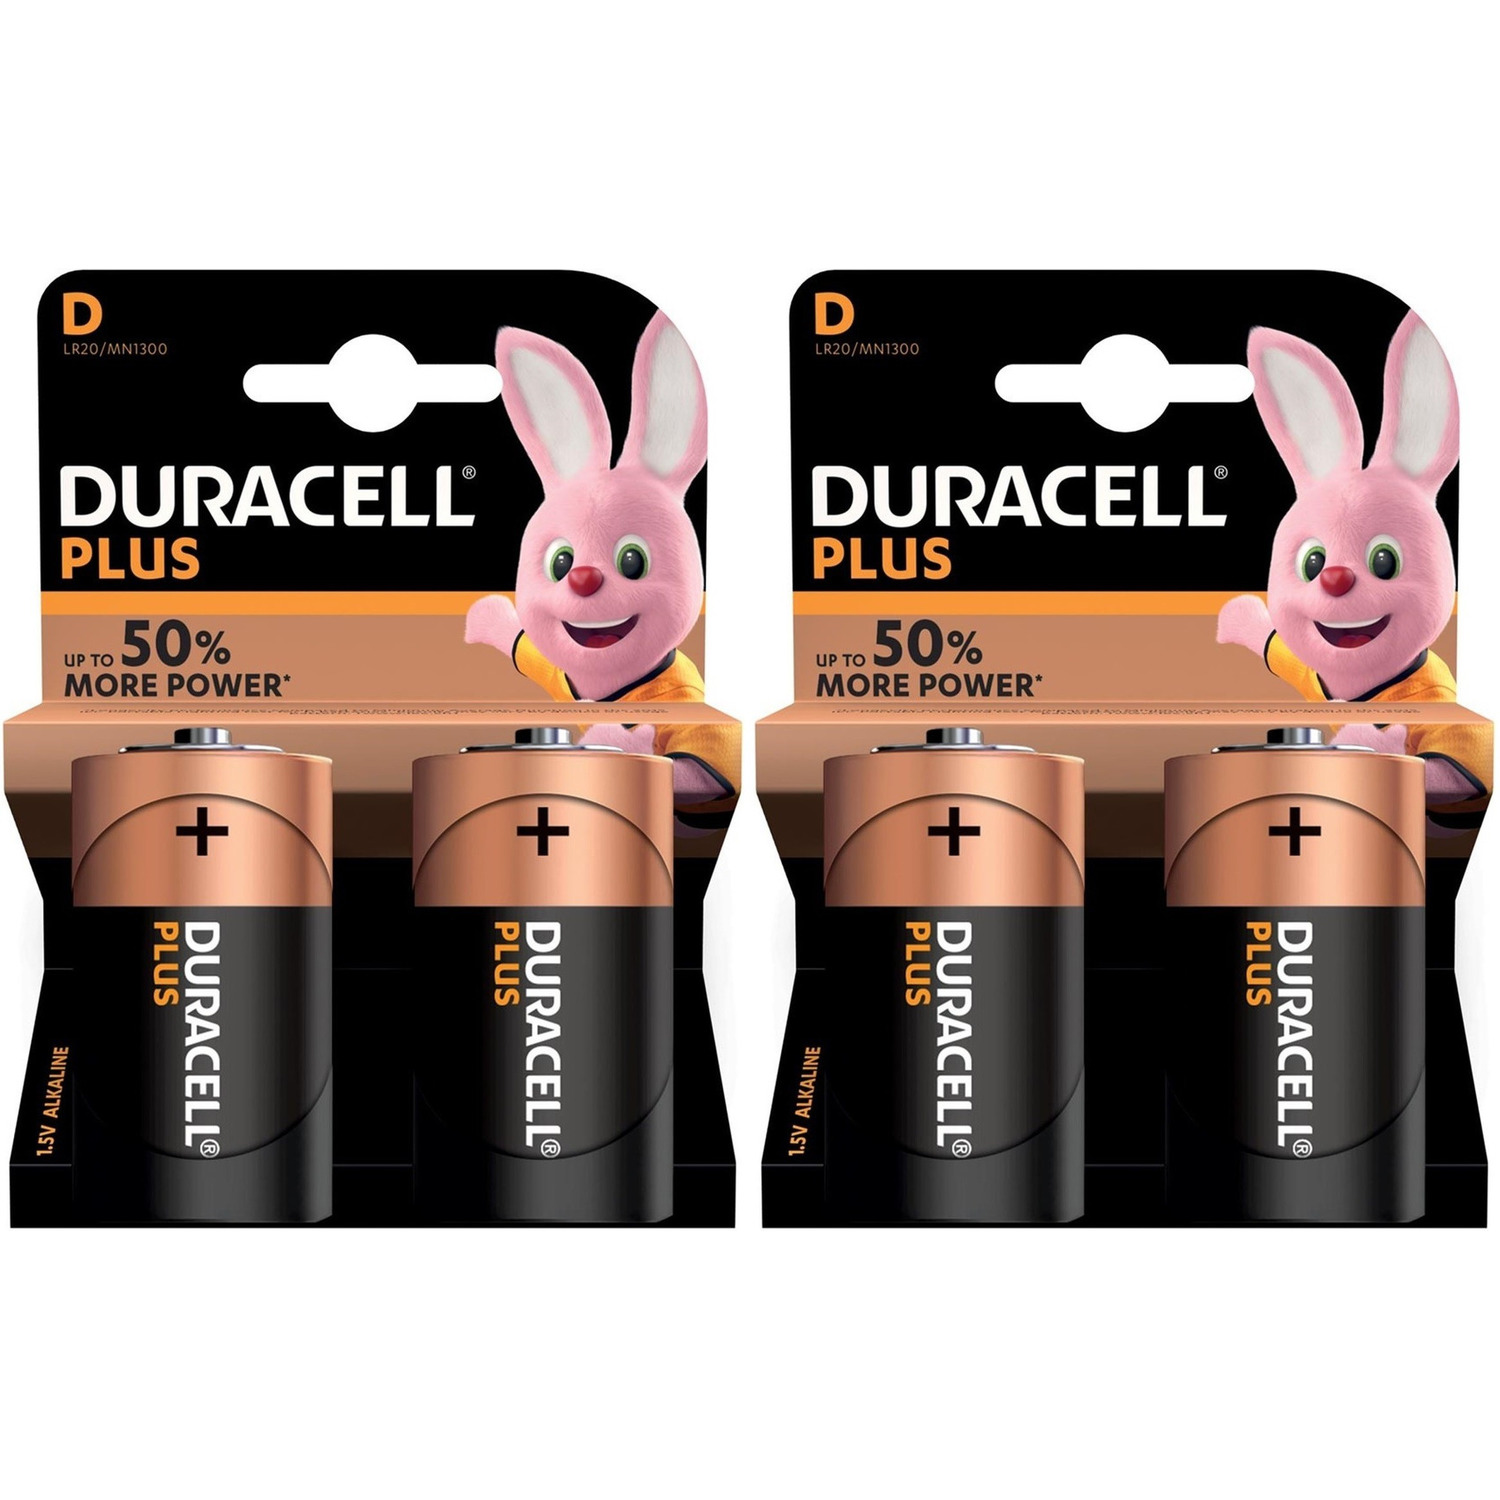 Set van 4x Duracell D Plus alkaline batterijen LR20 MN1300 1.5 V